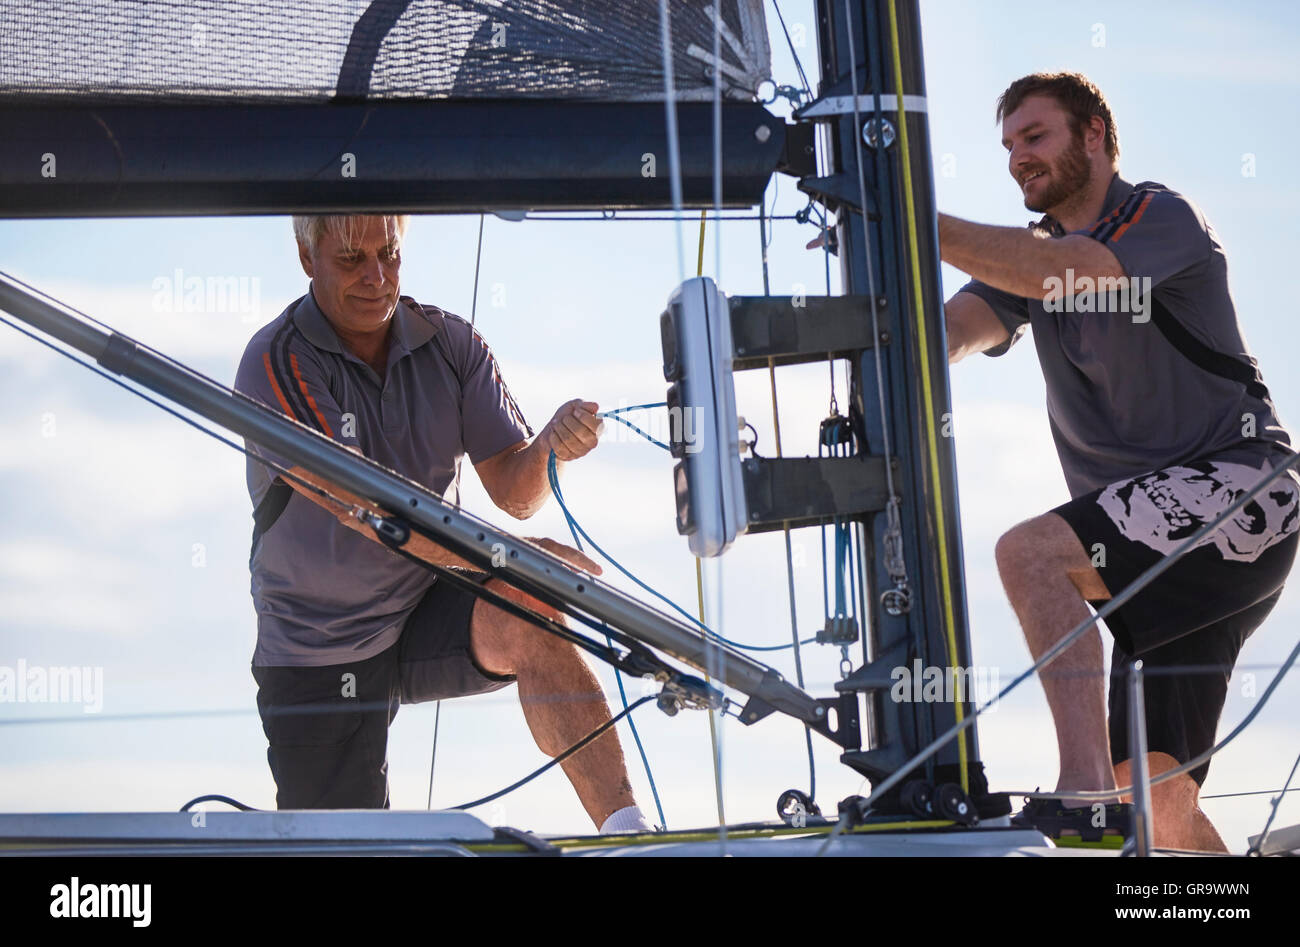 Men adjusting sailing equipment Stock Photo